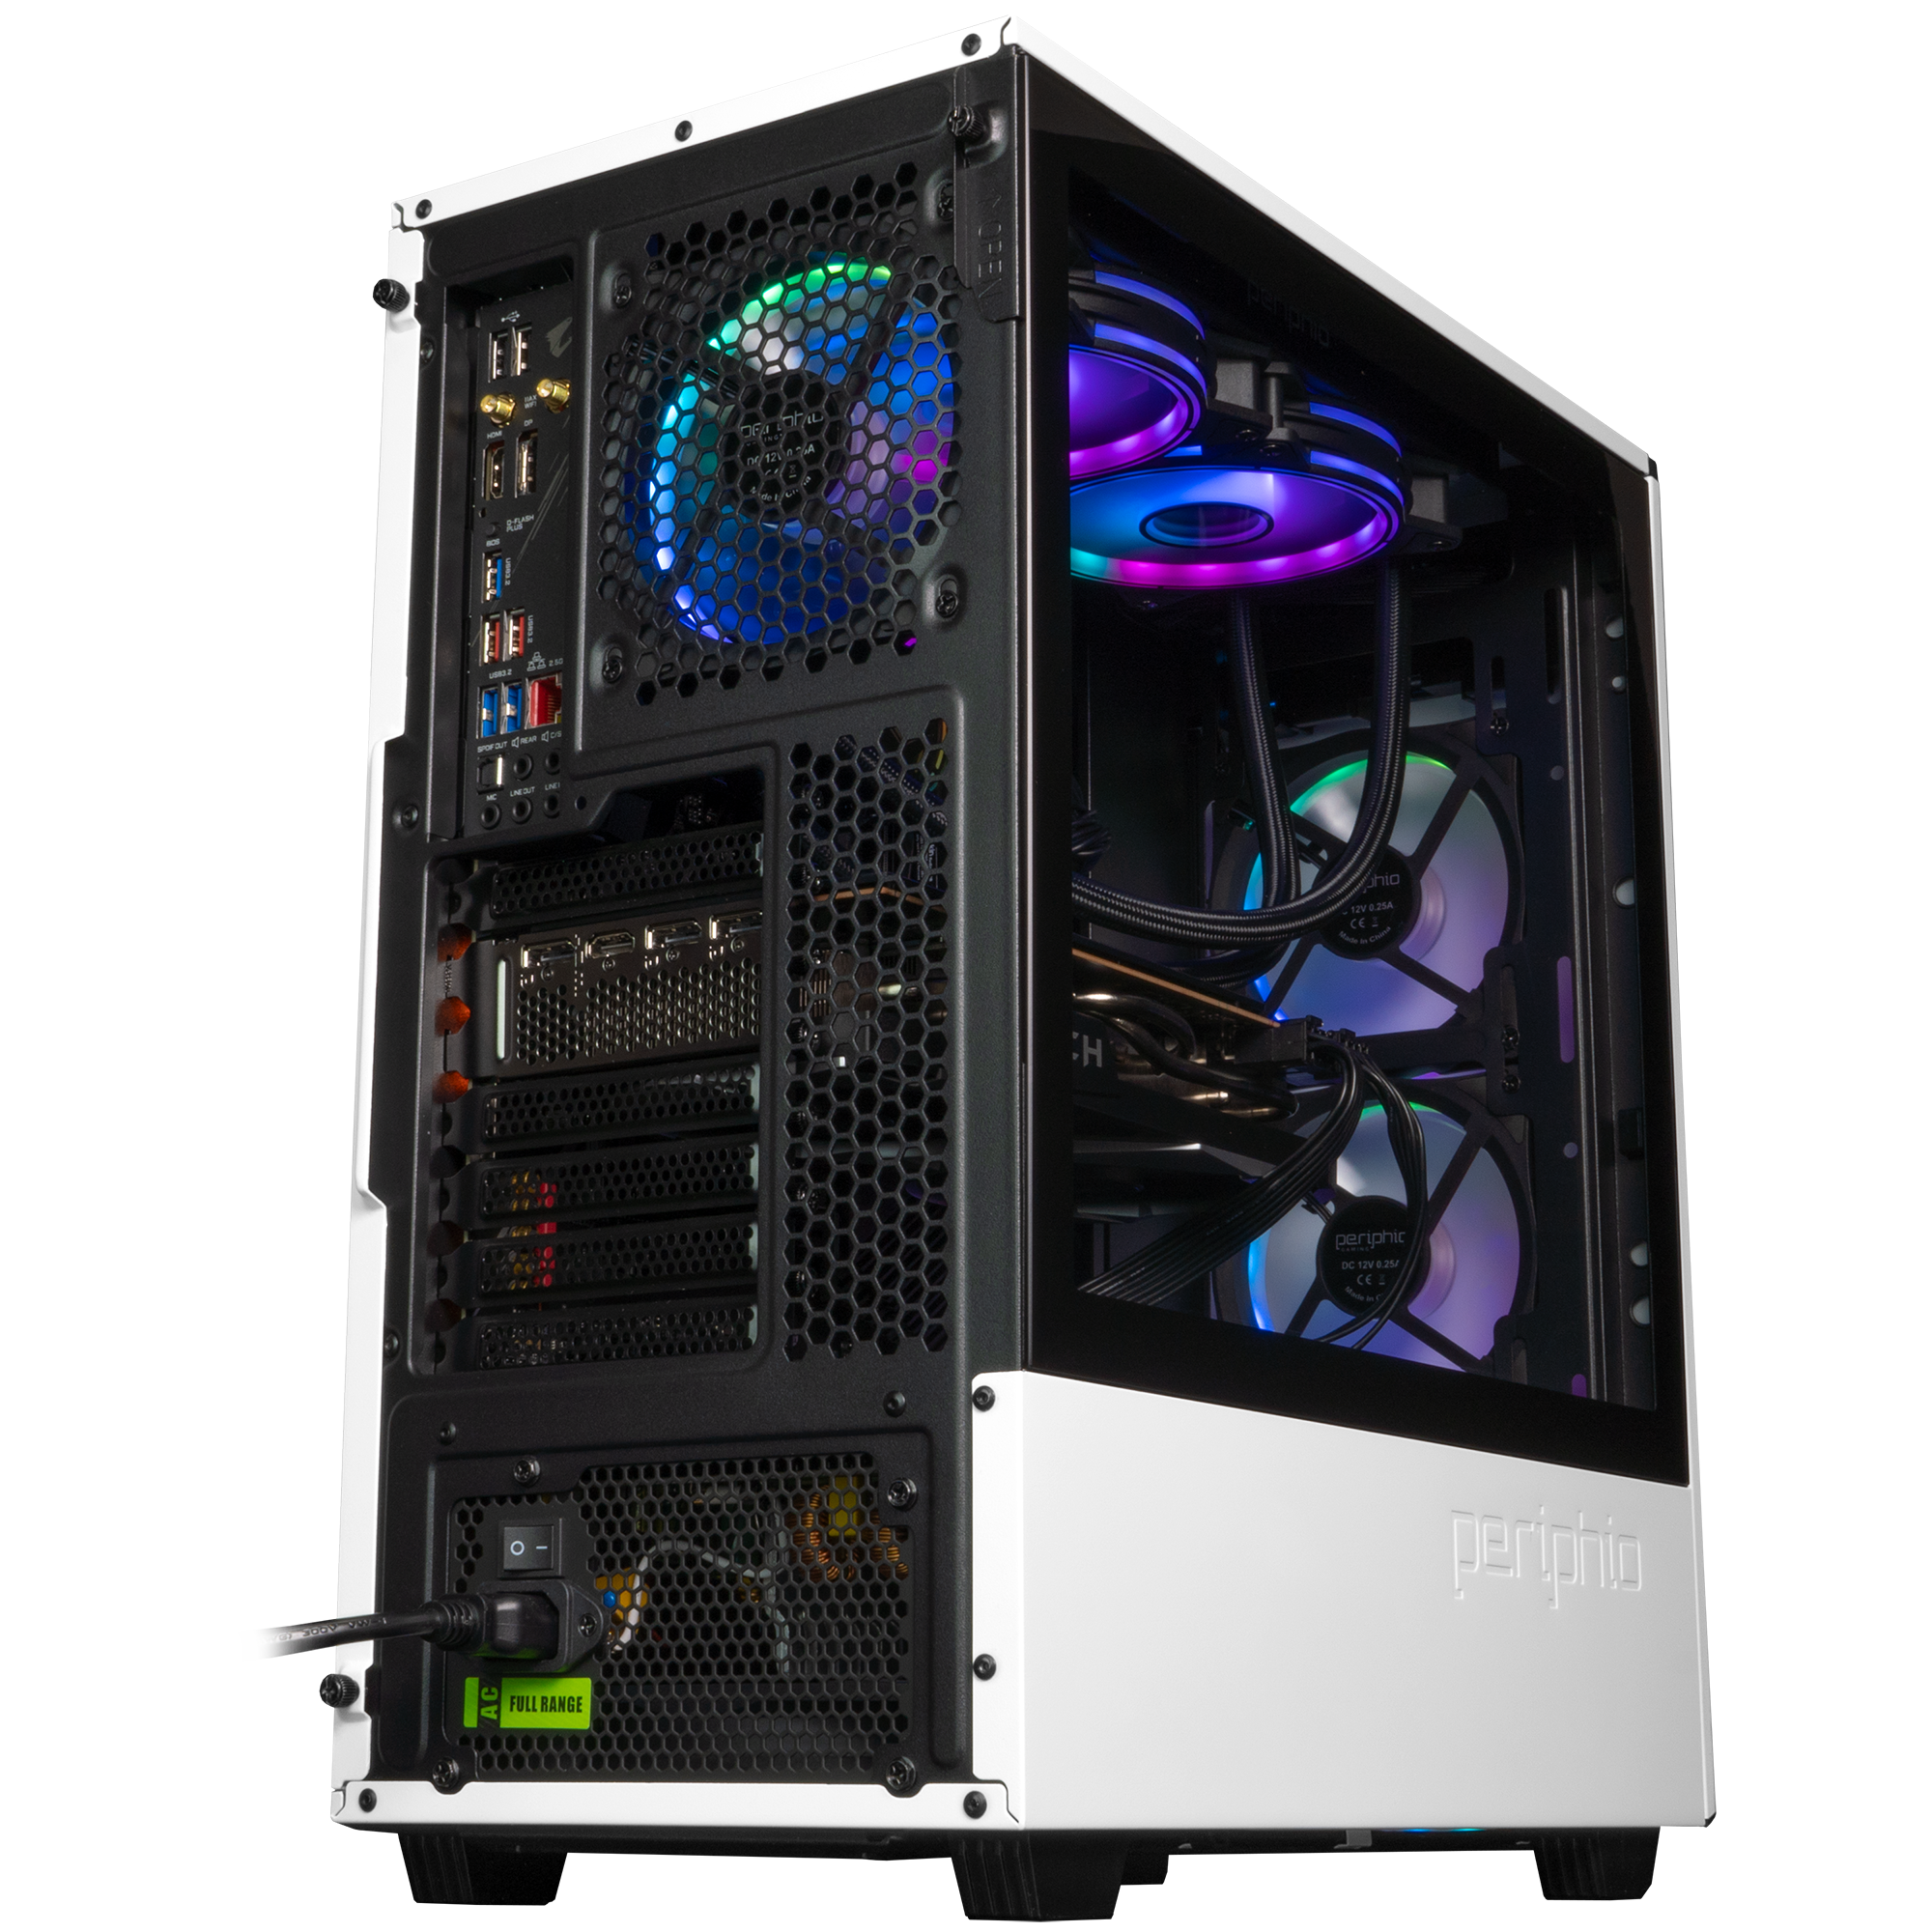 Periphio Nova | Powered by the Radeon RX 6750 XT | Prebuilt High-End VR  Ready Gaming PC | Aura Series (New)